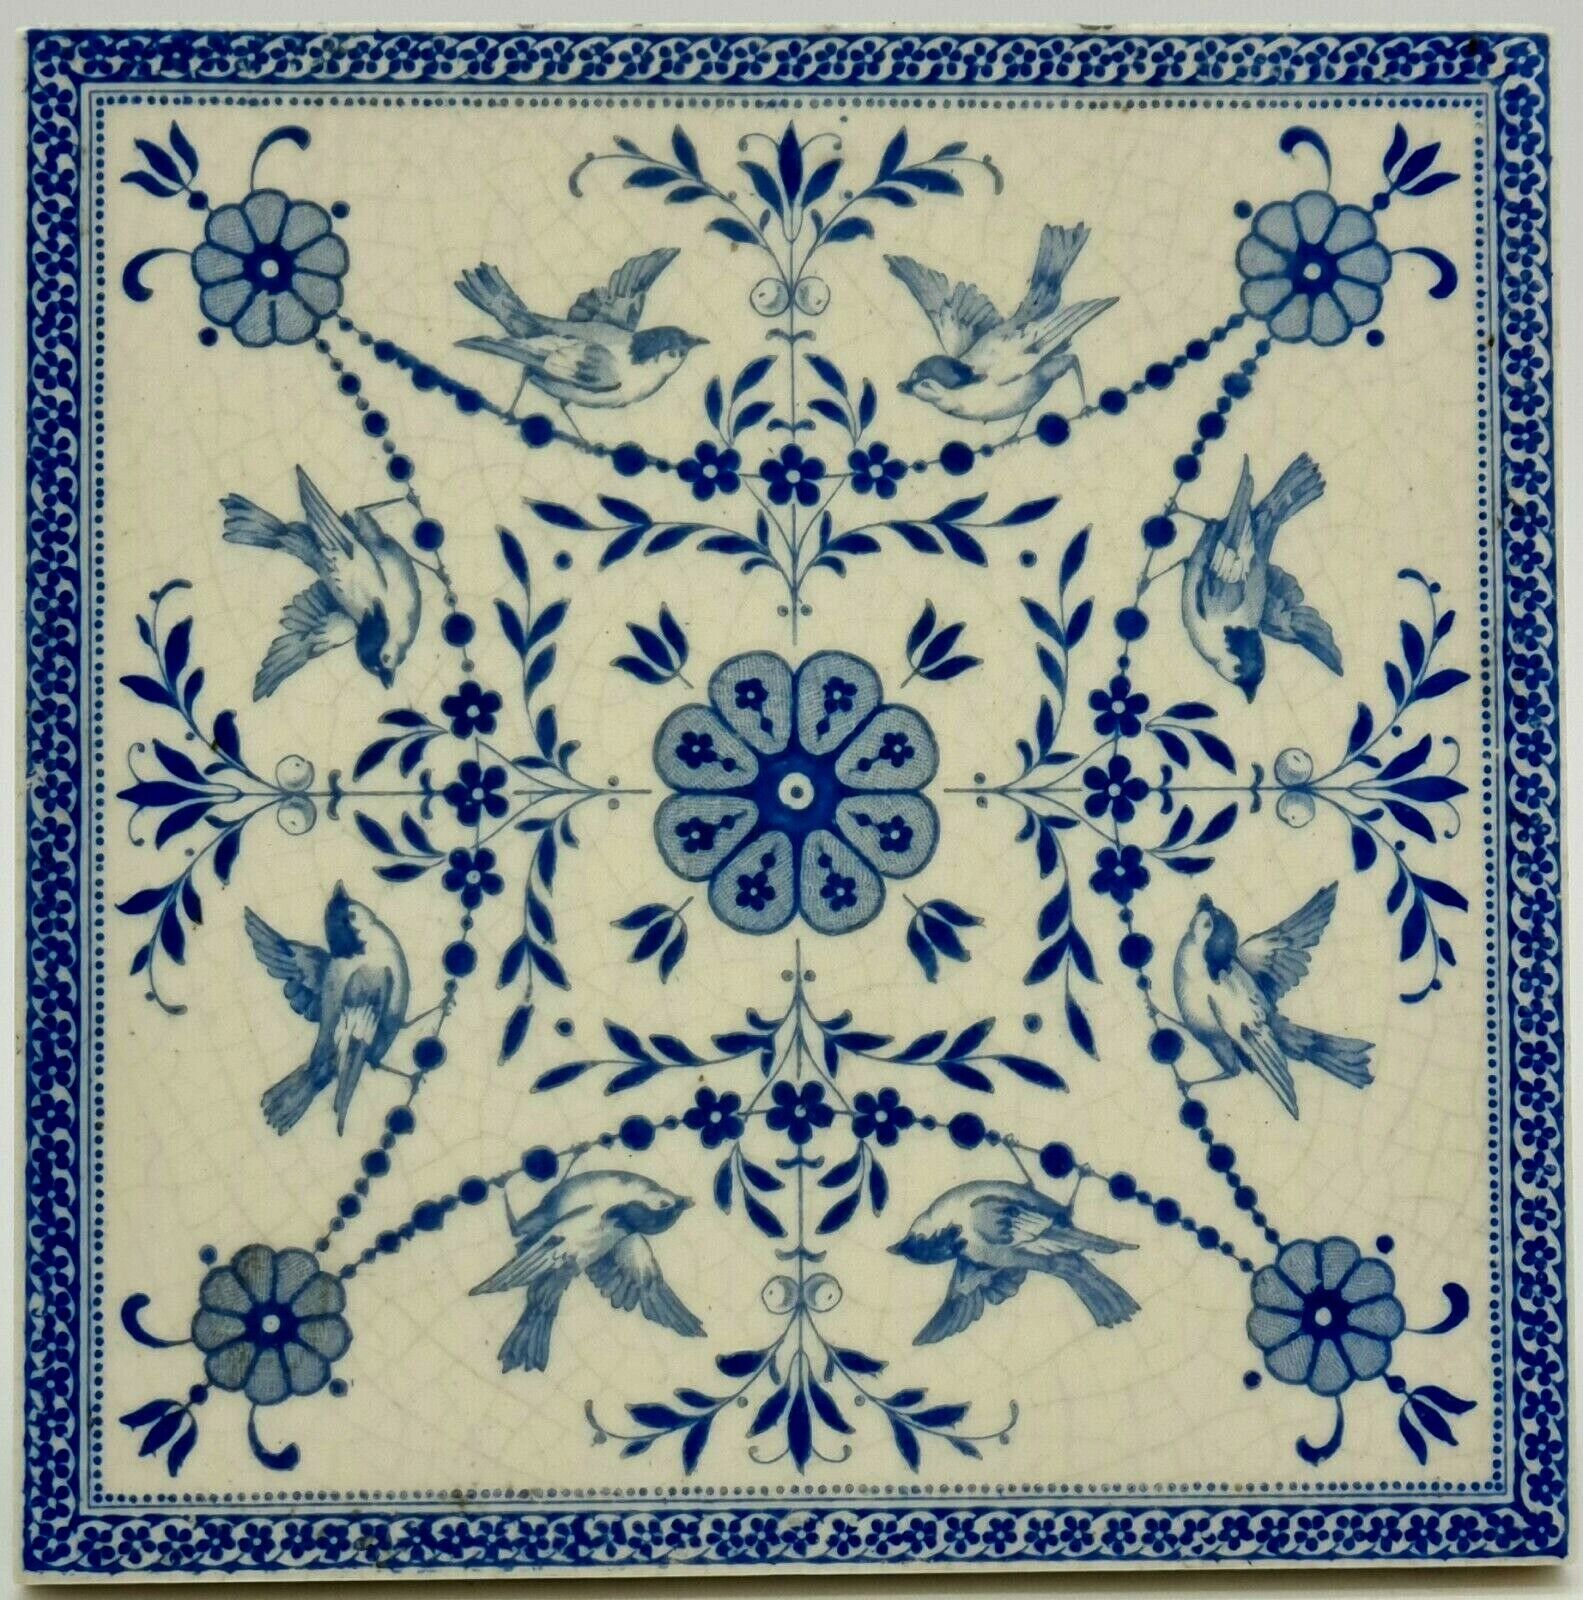 Fireplace Tile Josiah Wedgwood Transfer Printed Blue & White Til